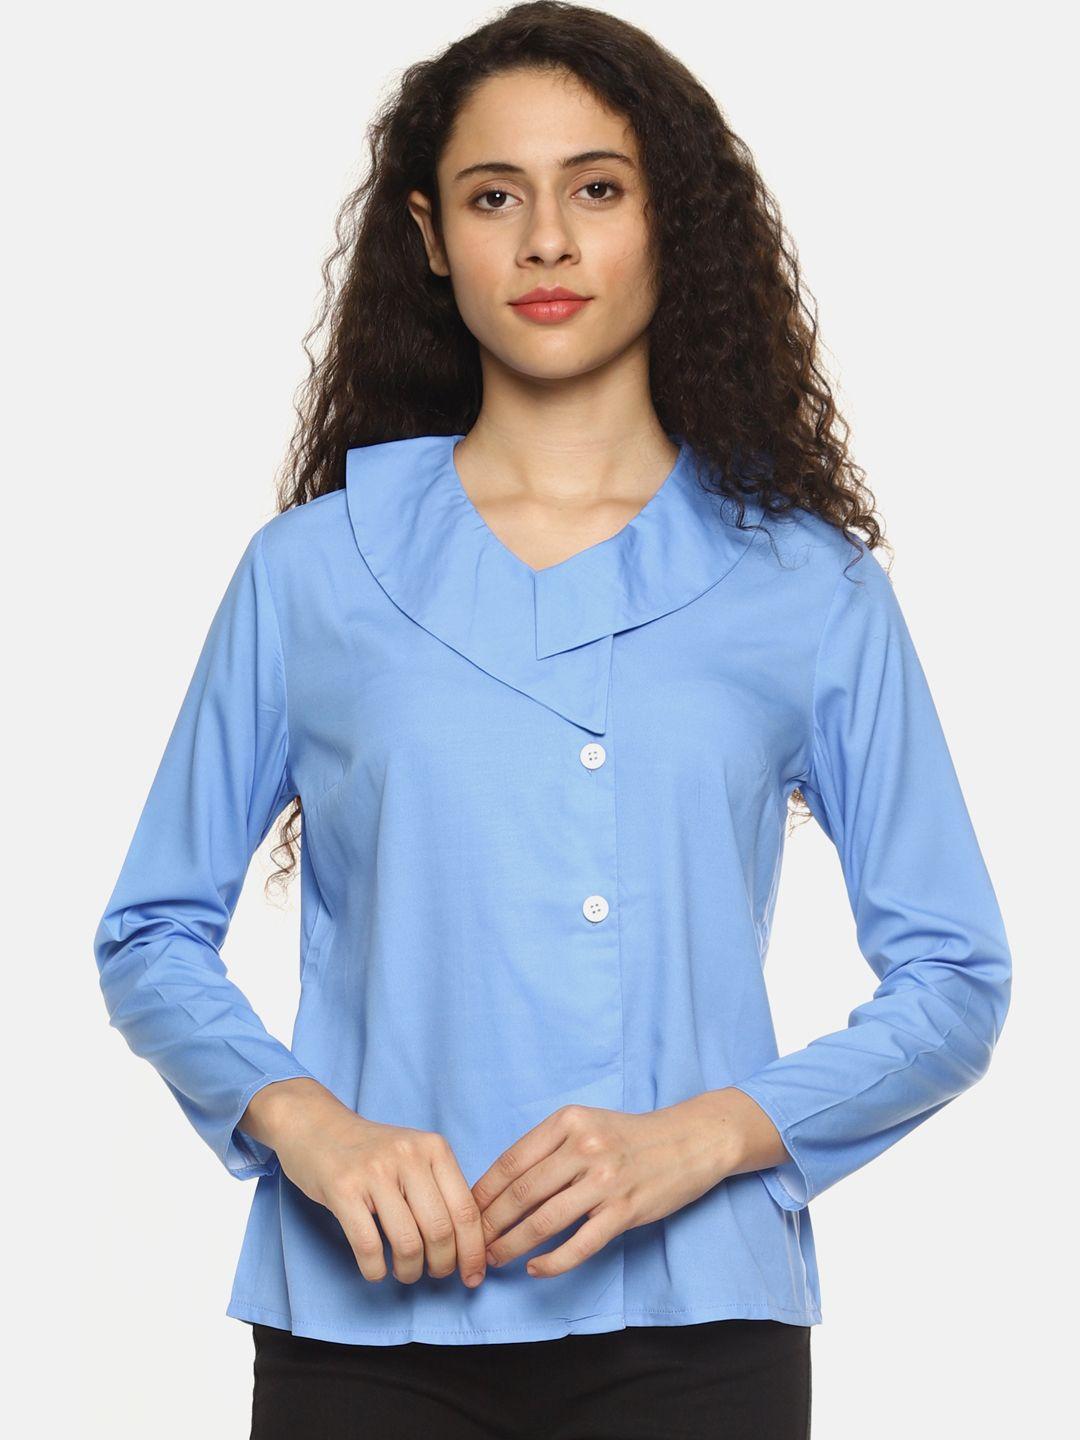 sahora women blue regular fit solid casual shirt